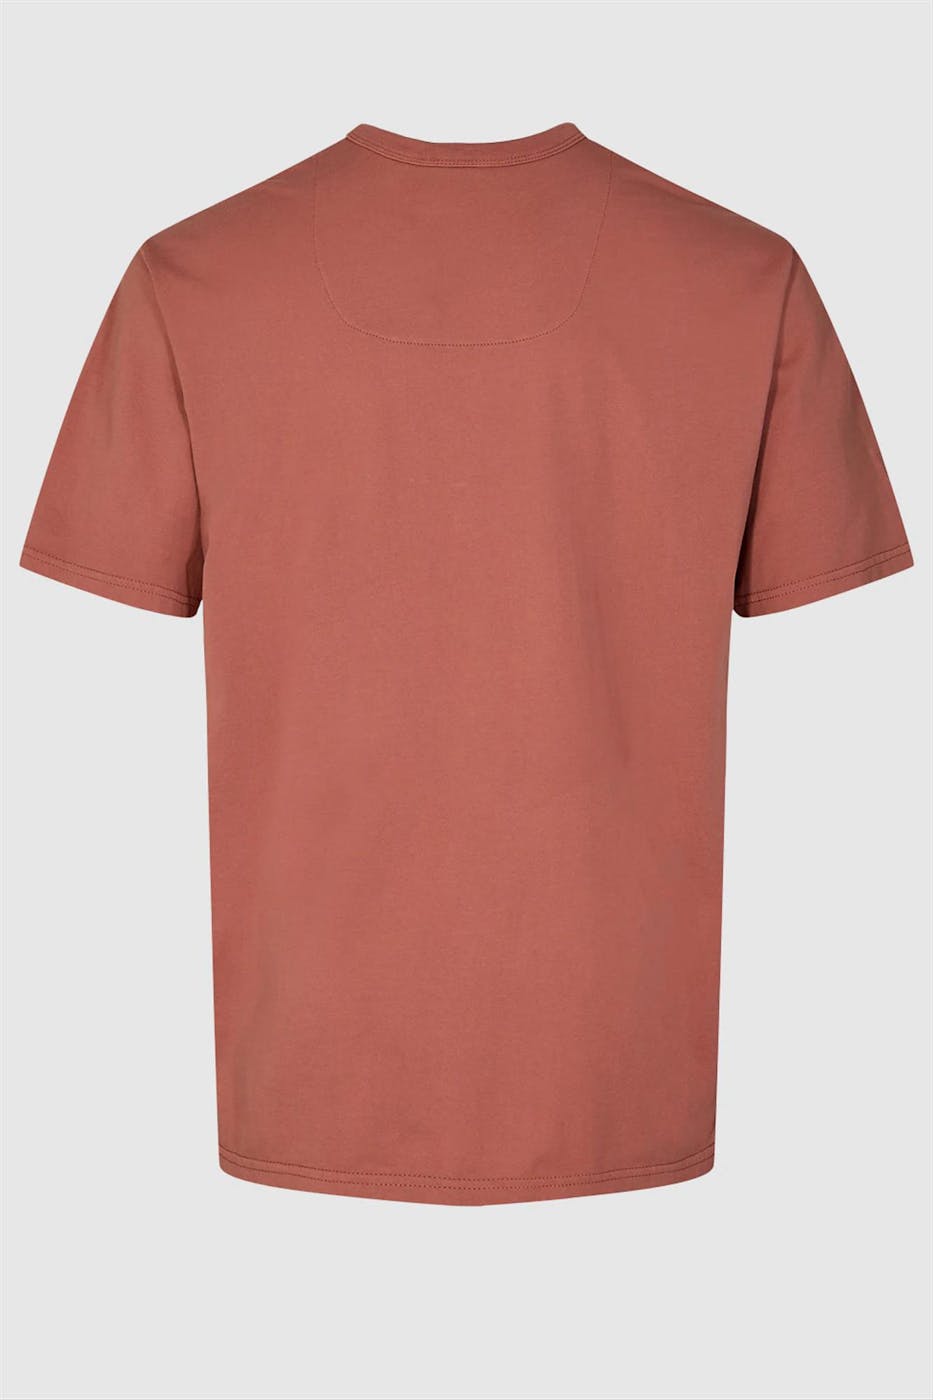 Minimum - Terracotta Haris T-shirt